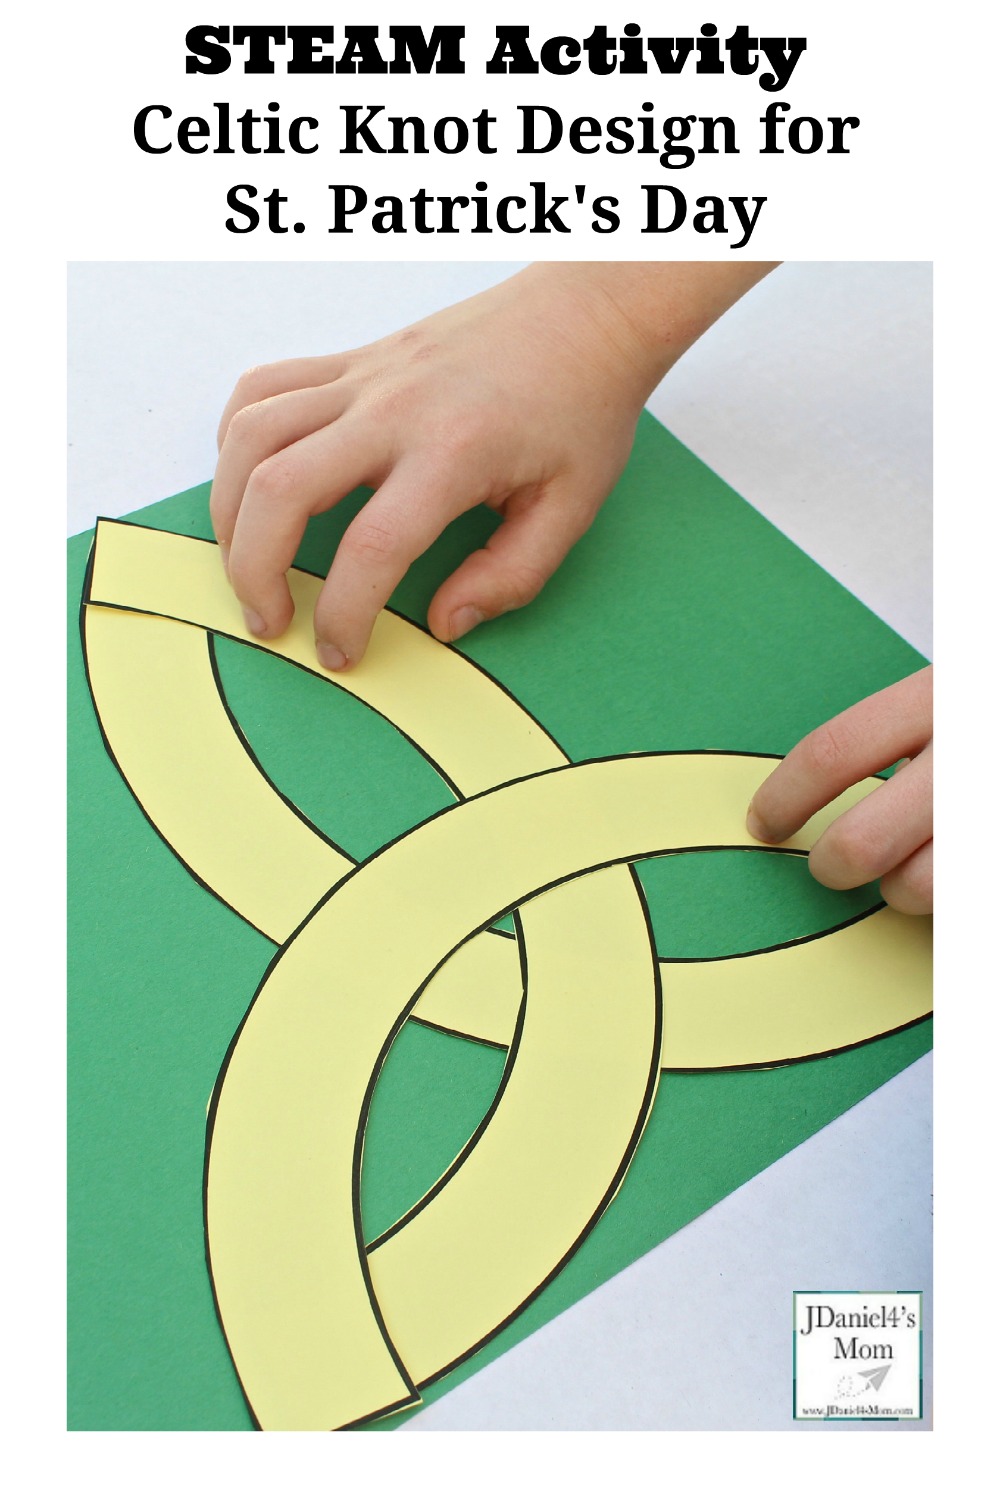 STEAM Activity Celtic Knot Design for St. Patrick's Day Pinterest